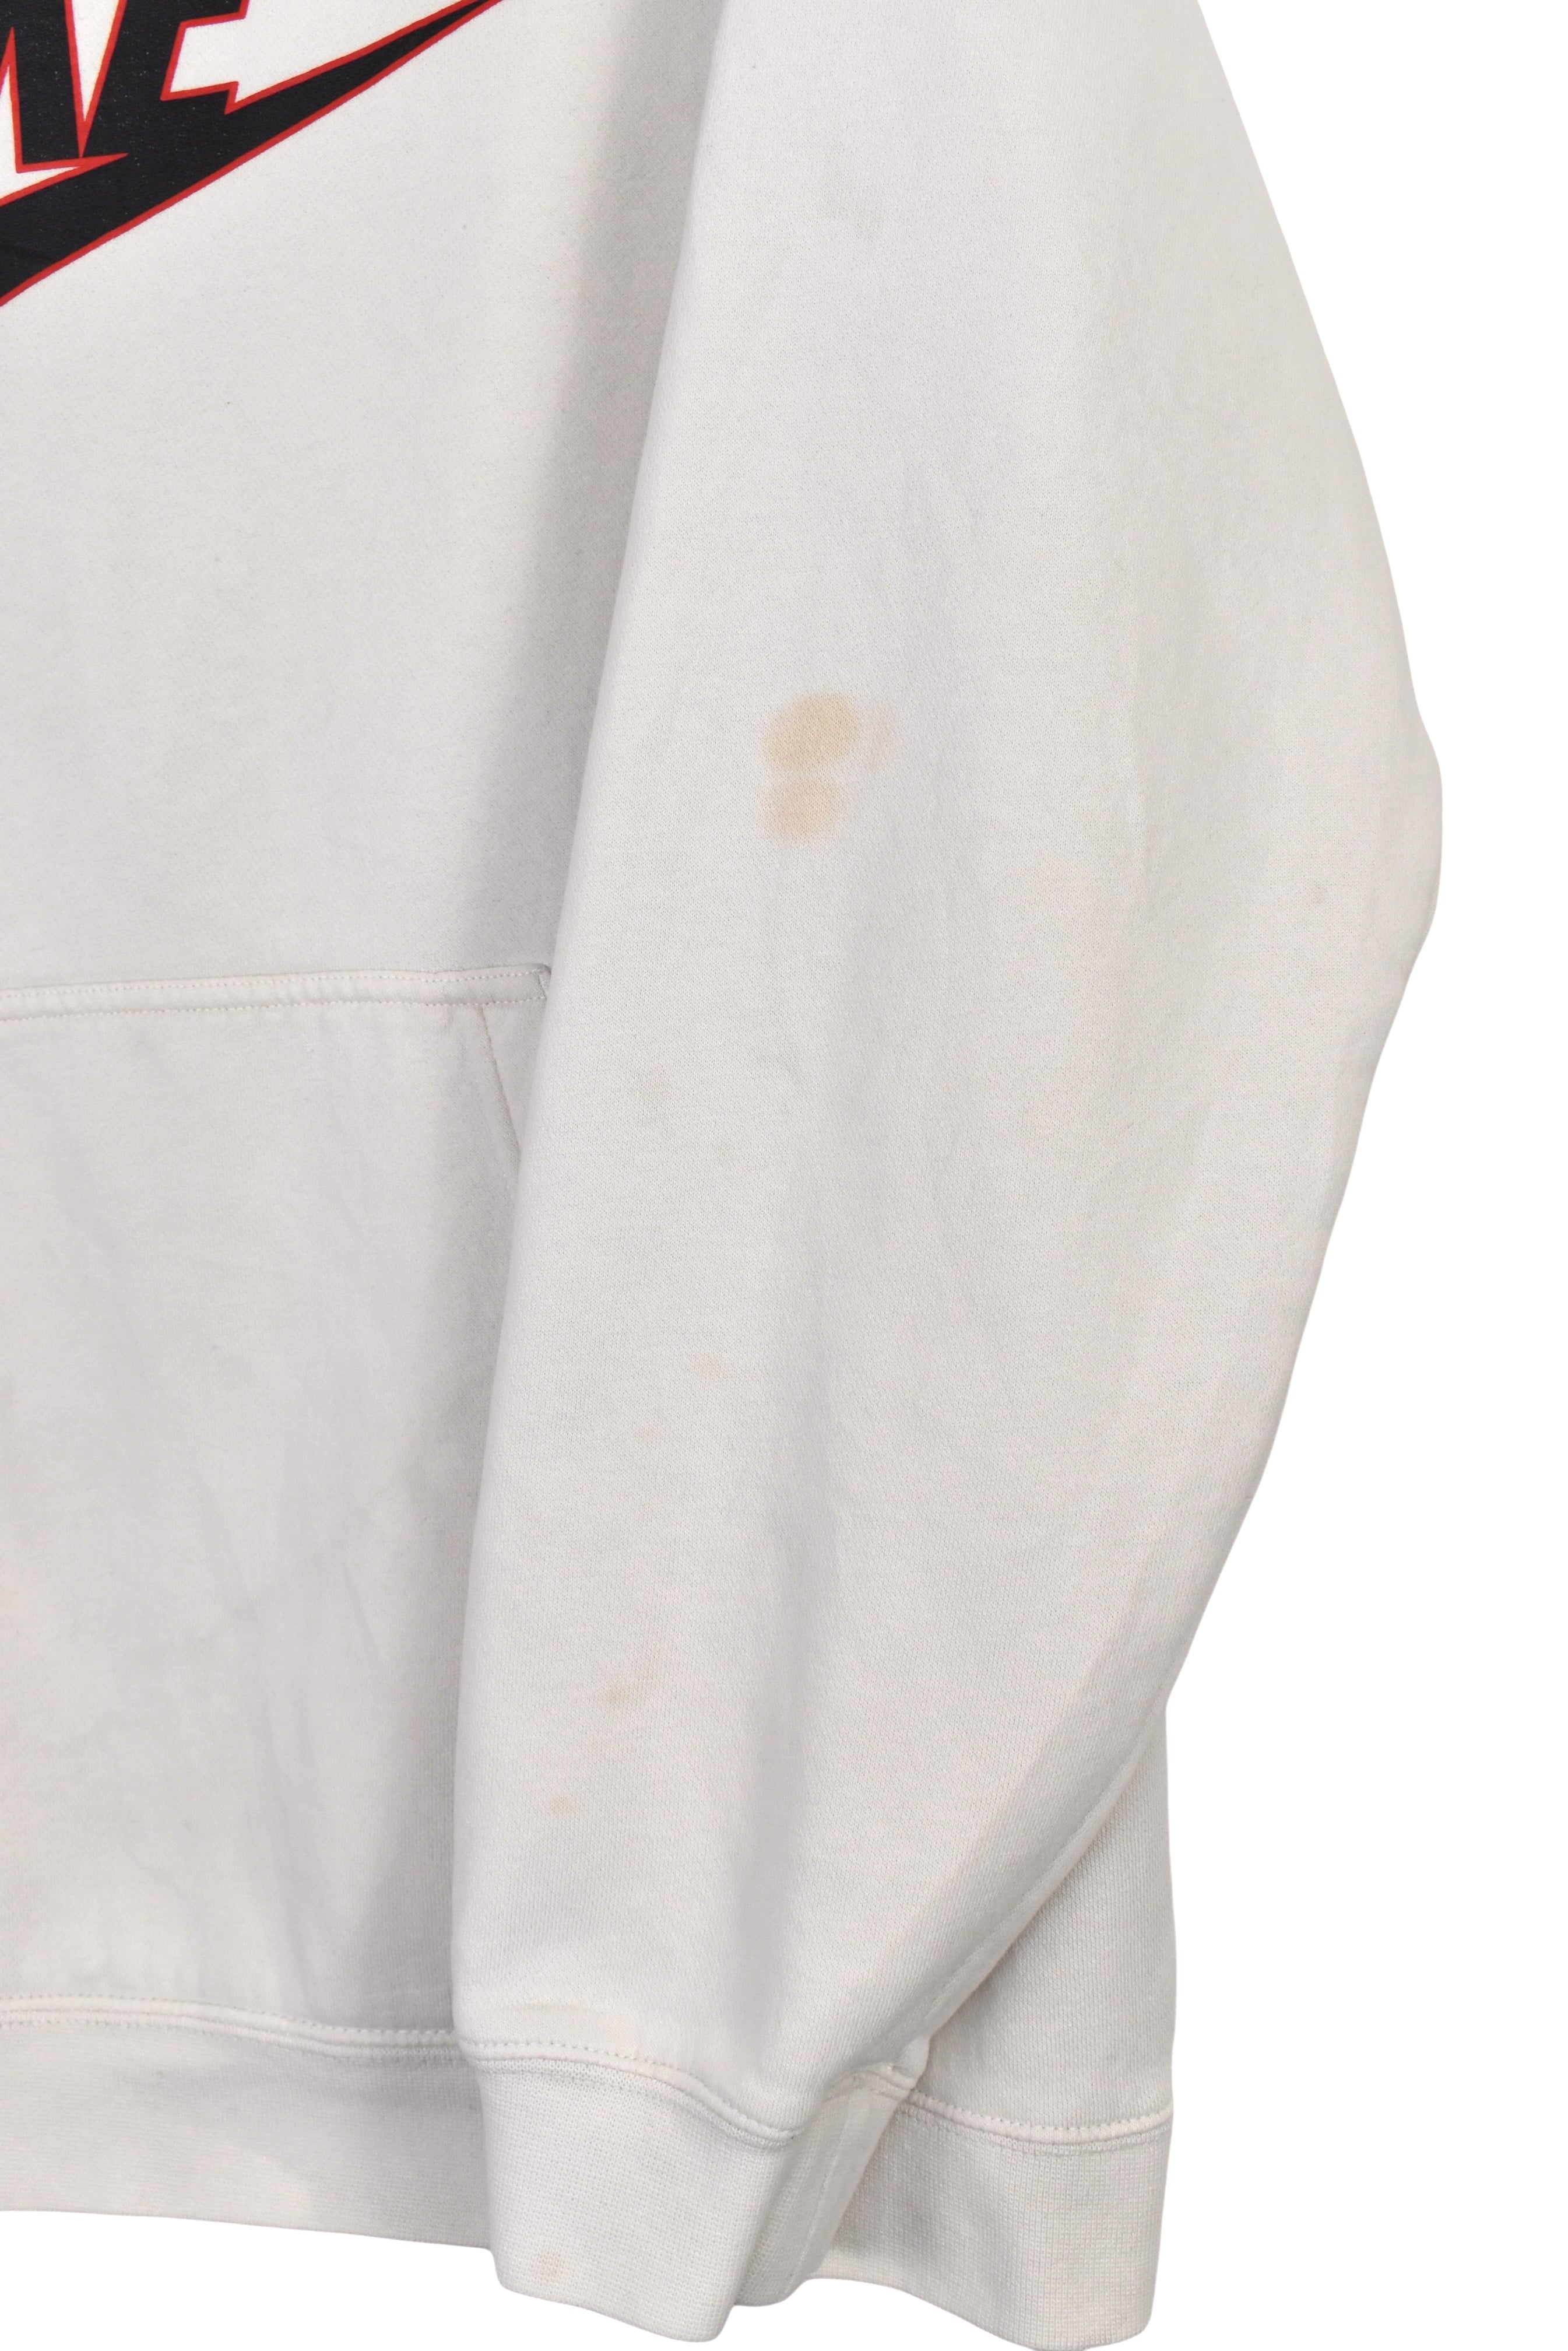 Vintage Nike hoodie (XL), white graphic sweatshirt